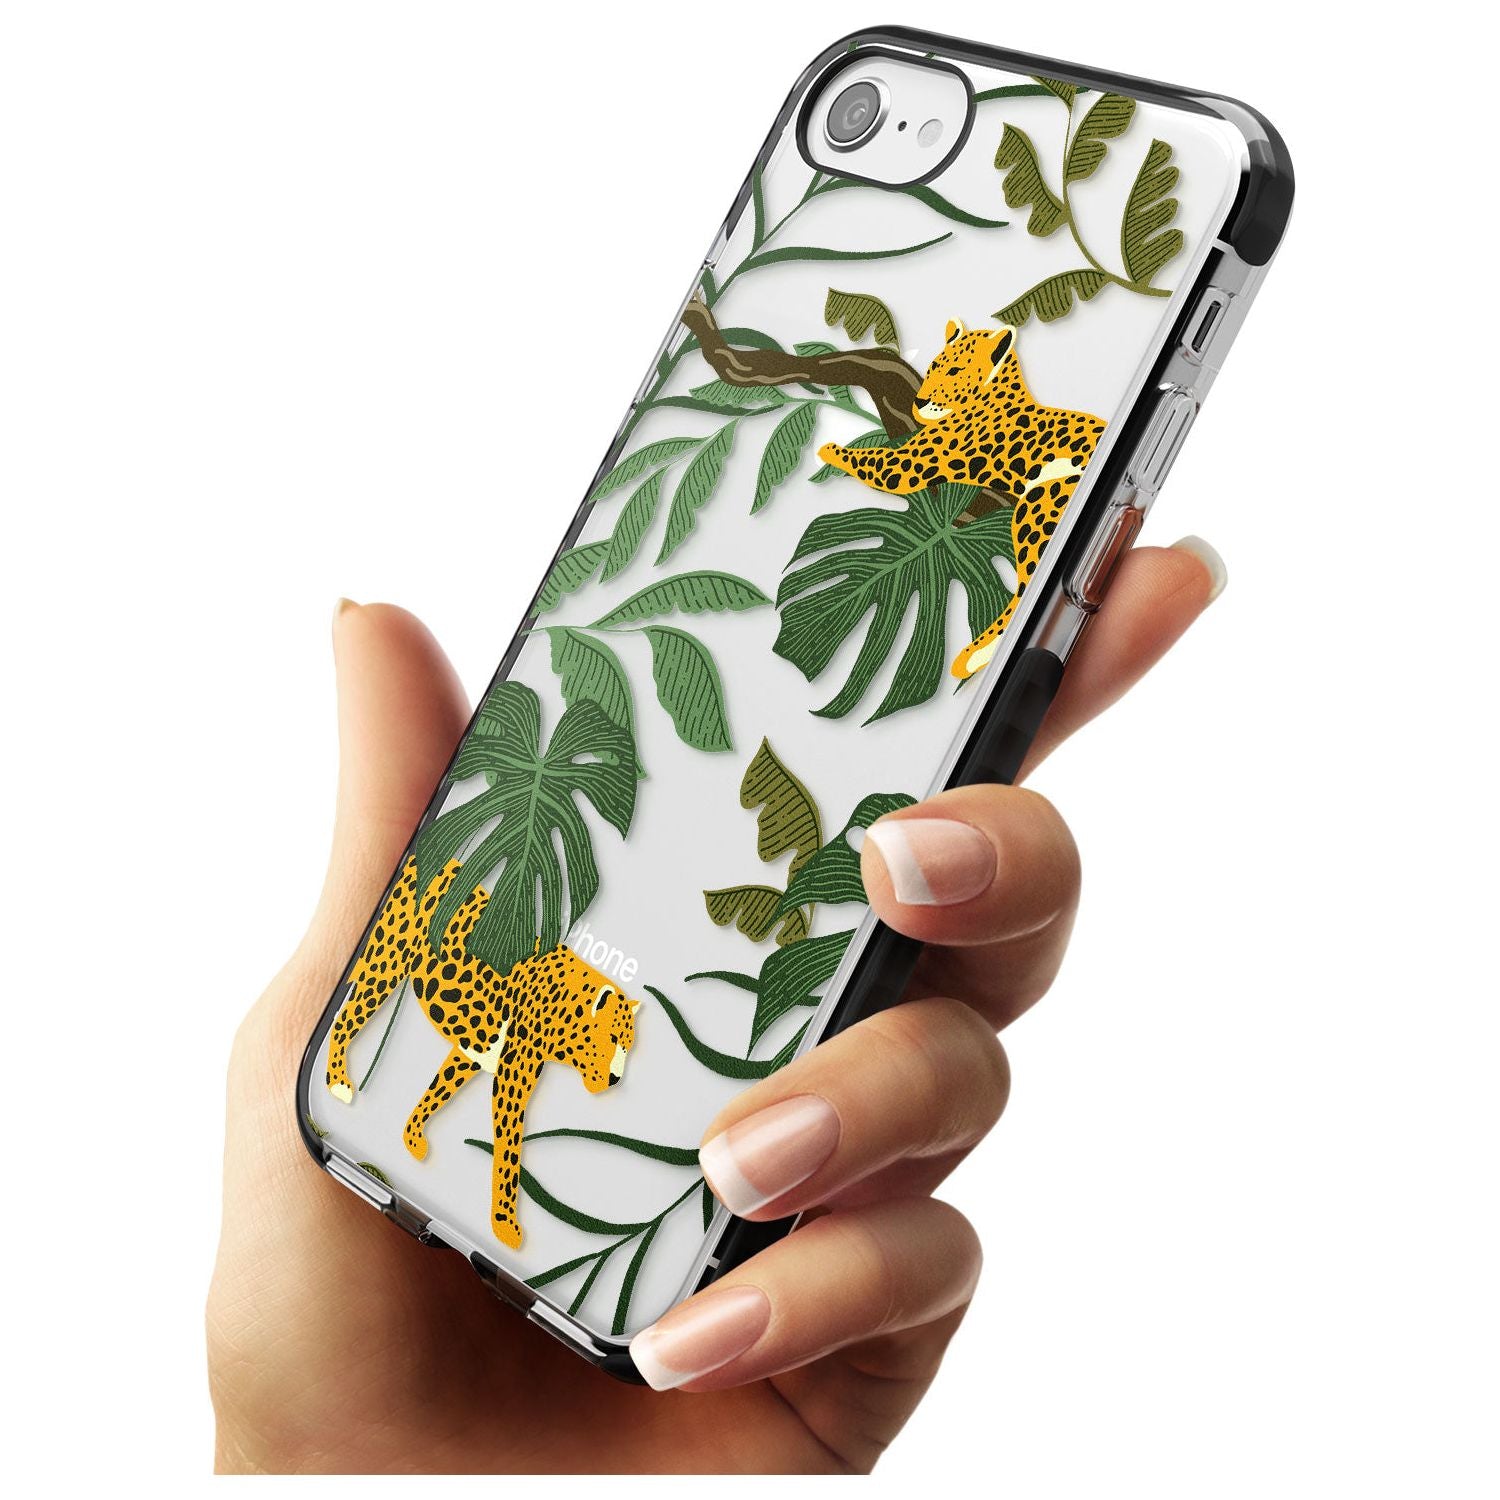 Two Jaguars & Foliage Jungle Cat Pattern Black Impact Phone Case for iPhone SE 8 7 Plus